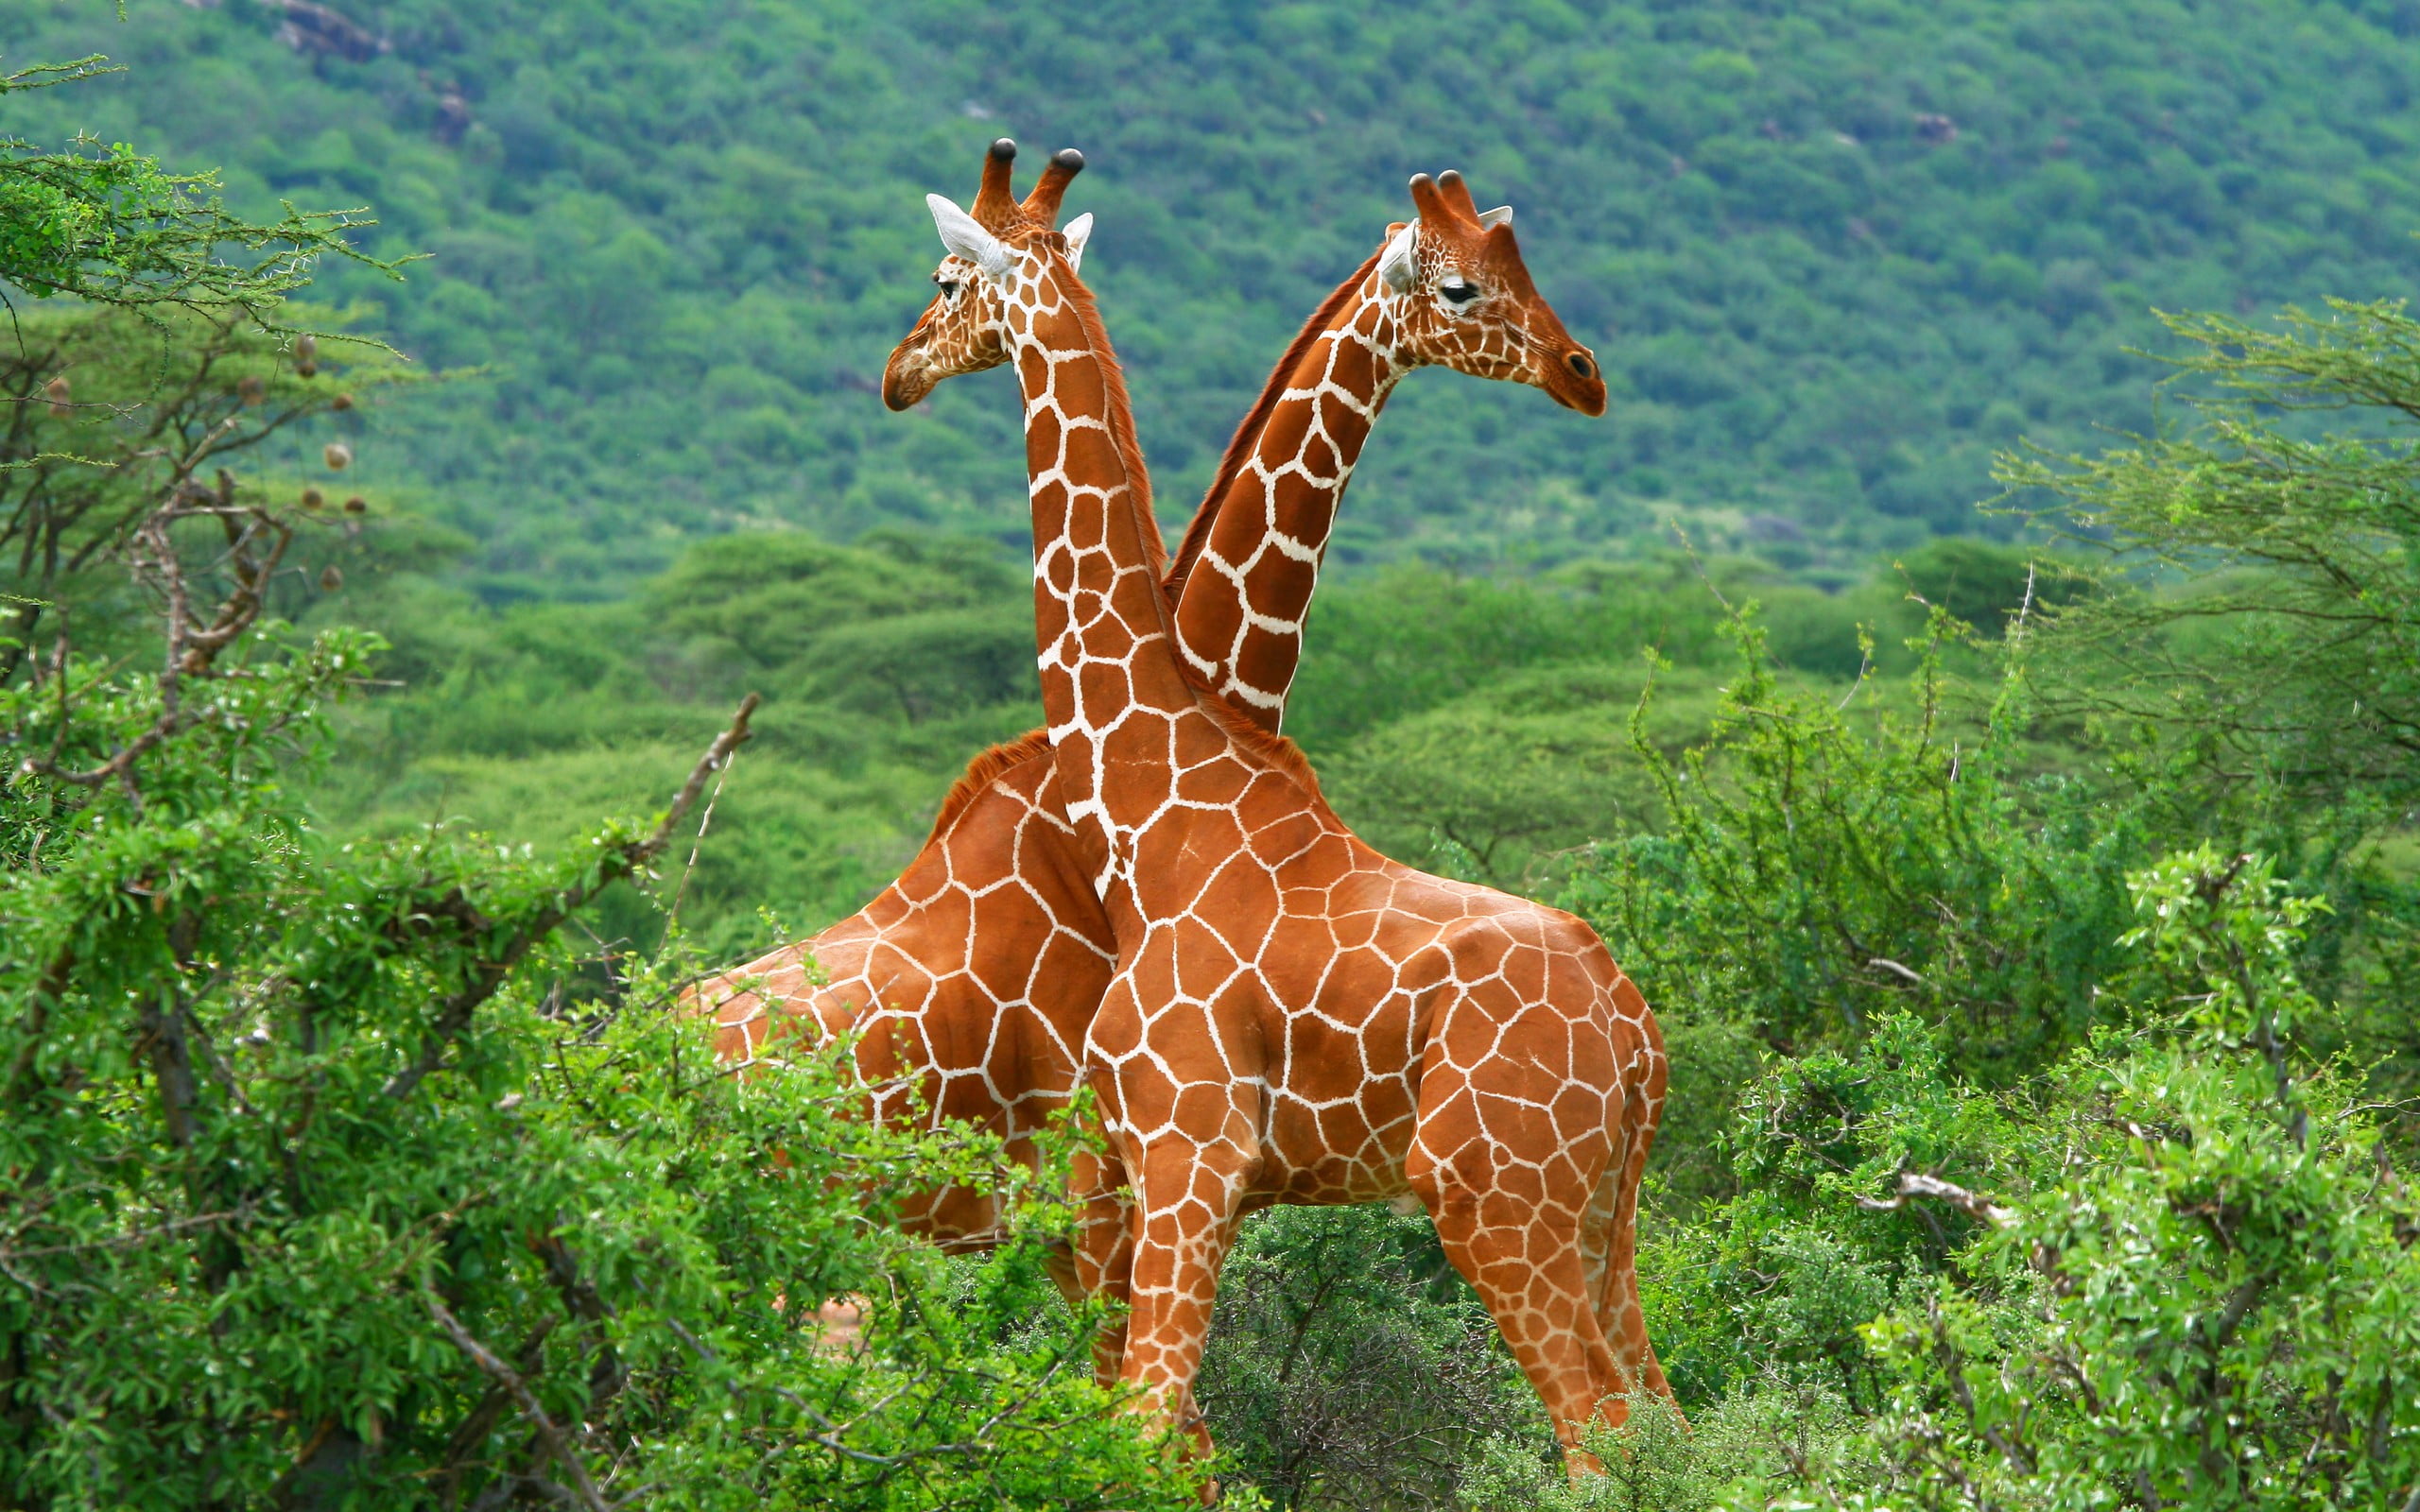 two brown giraffe, giraffes, animals, forest, animal themes, animal wildlife